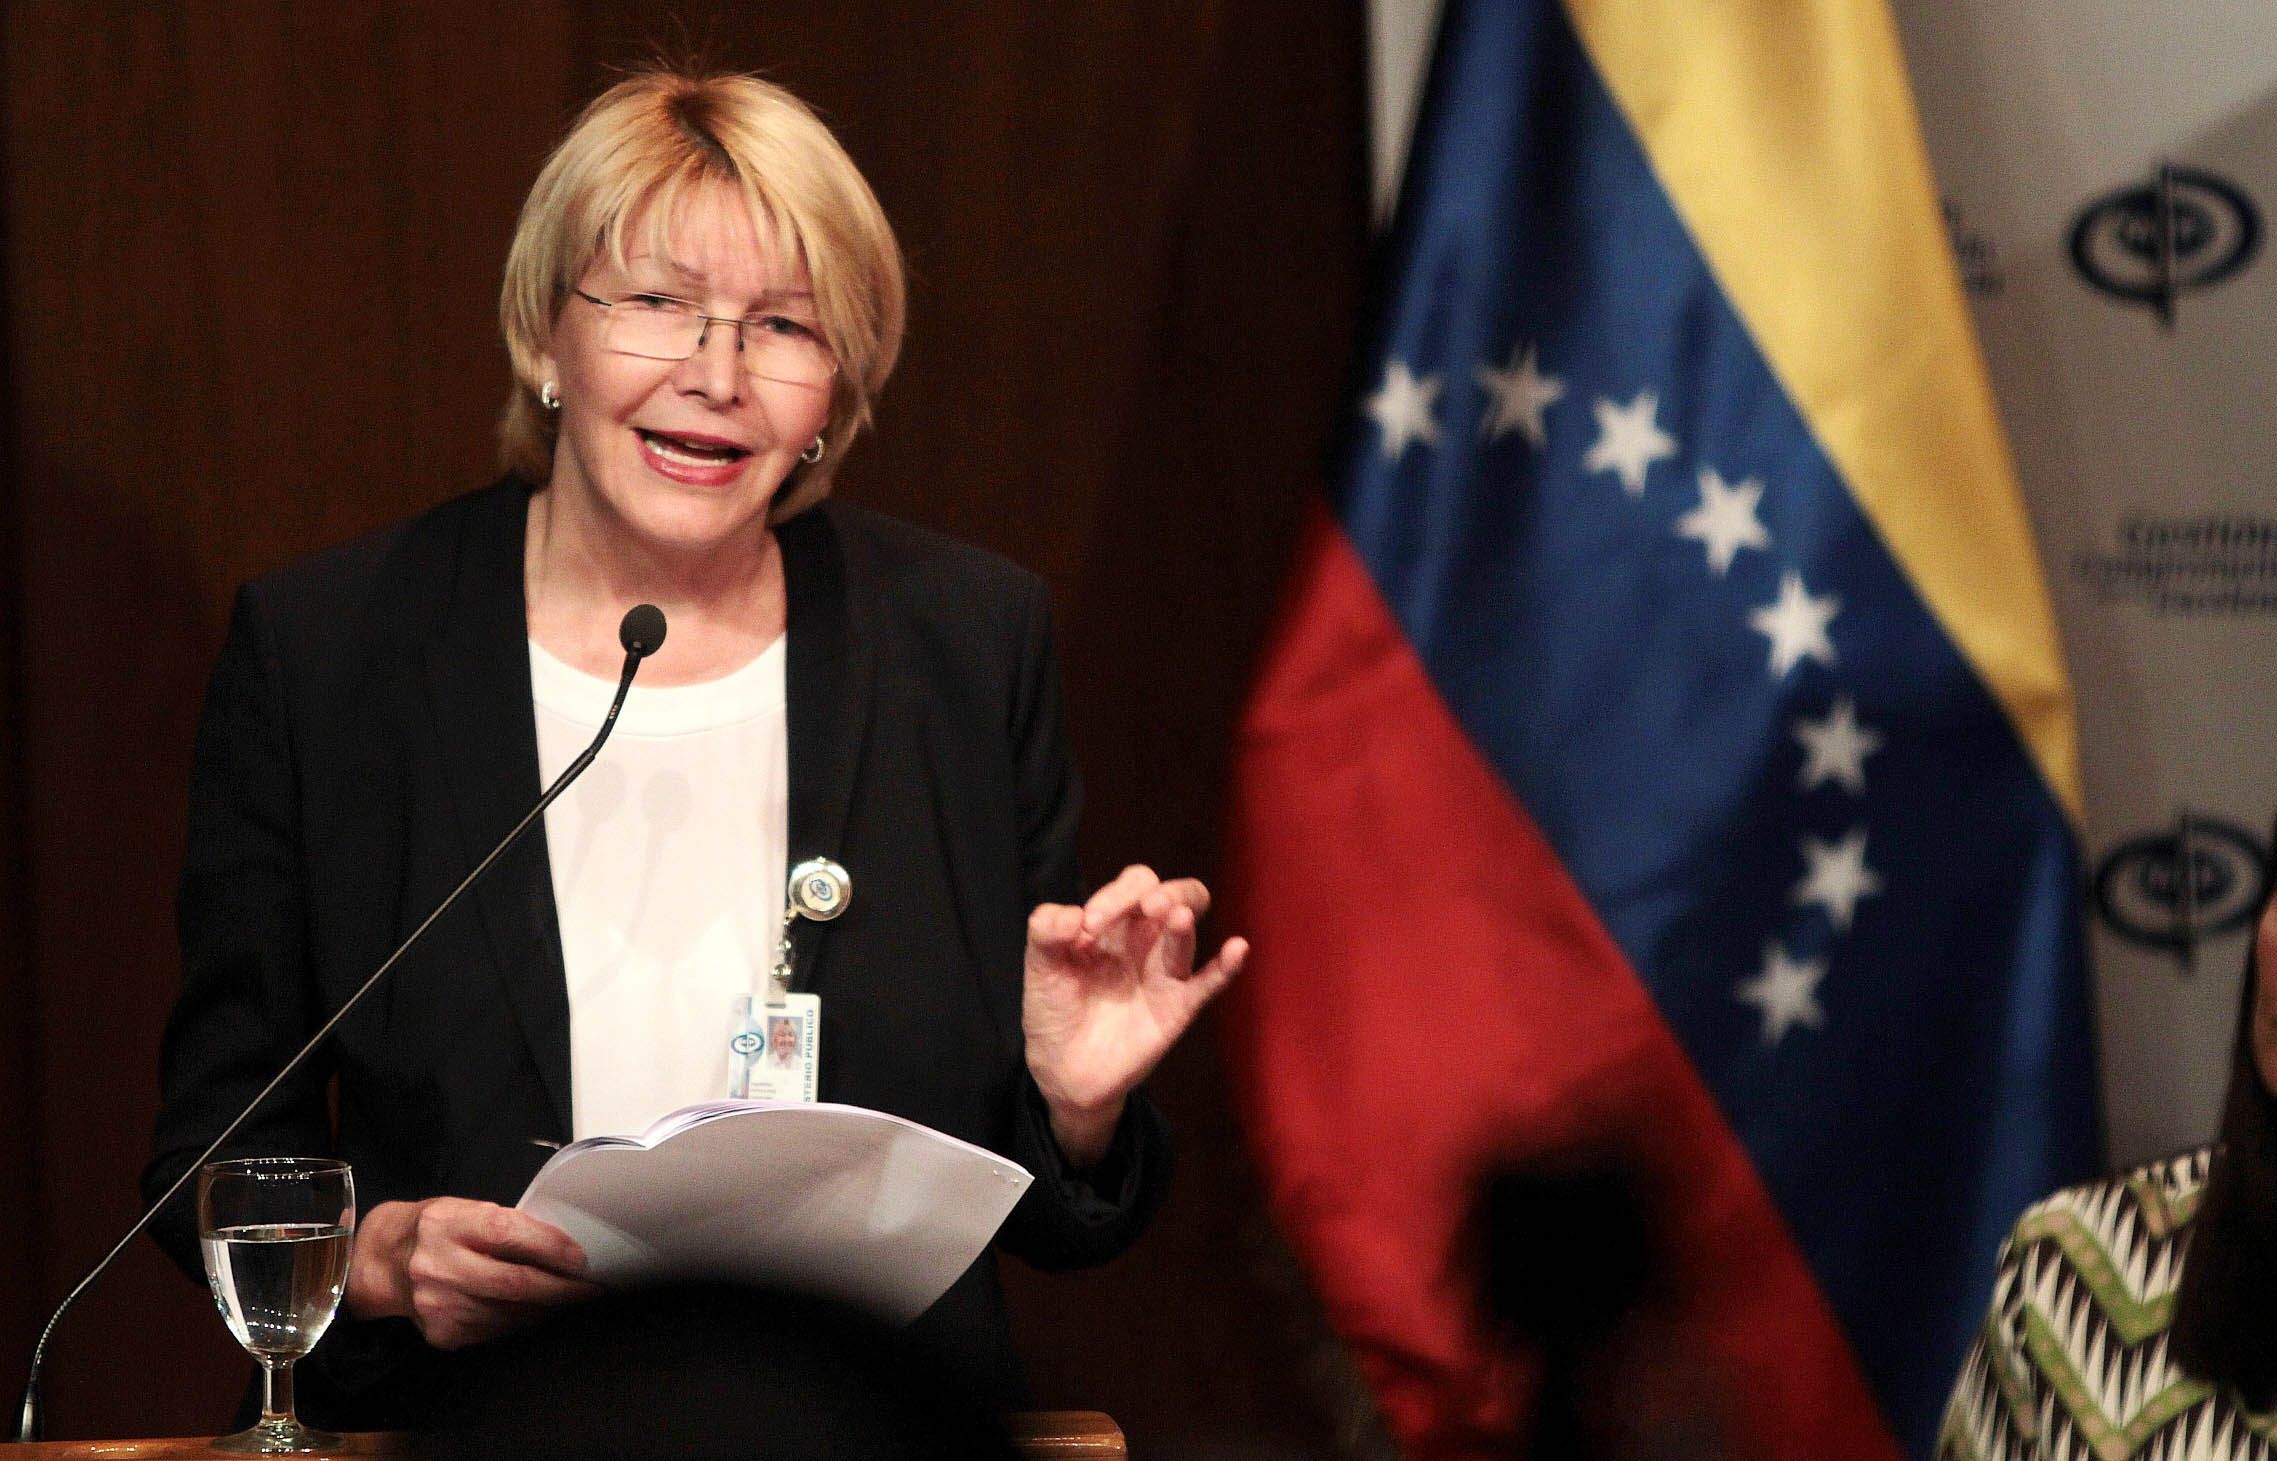 Luisa Ortega Díaz exhorta a la oposición venezolana a “corregir” errores para “avanzar”